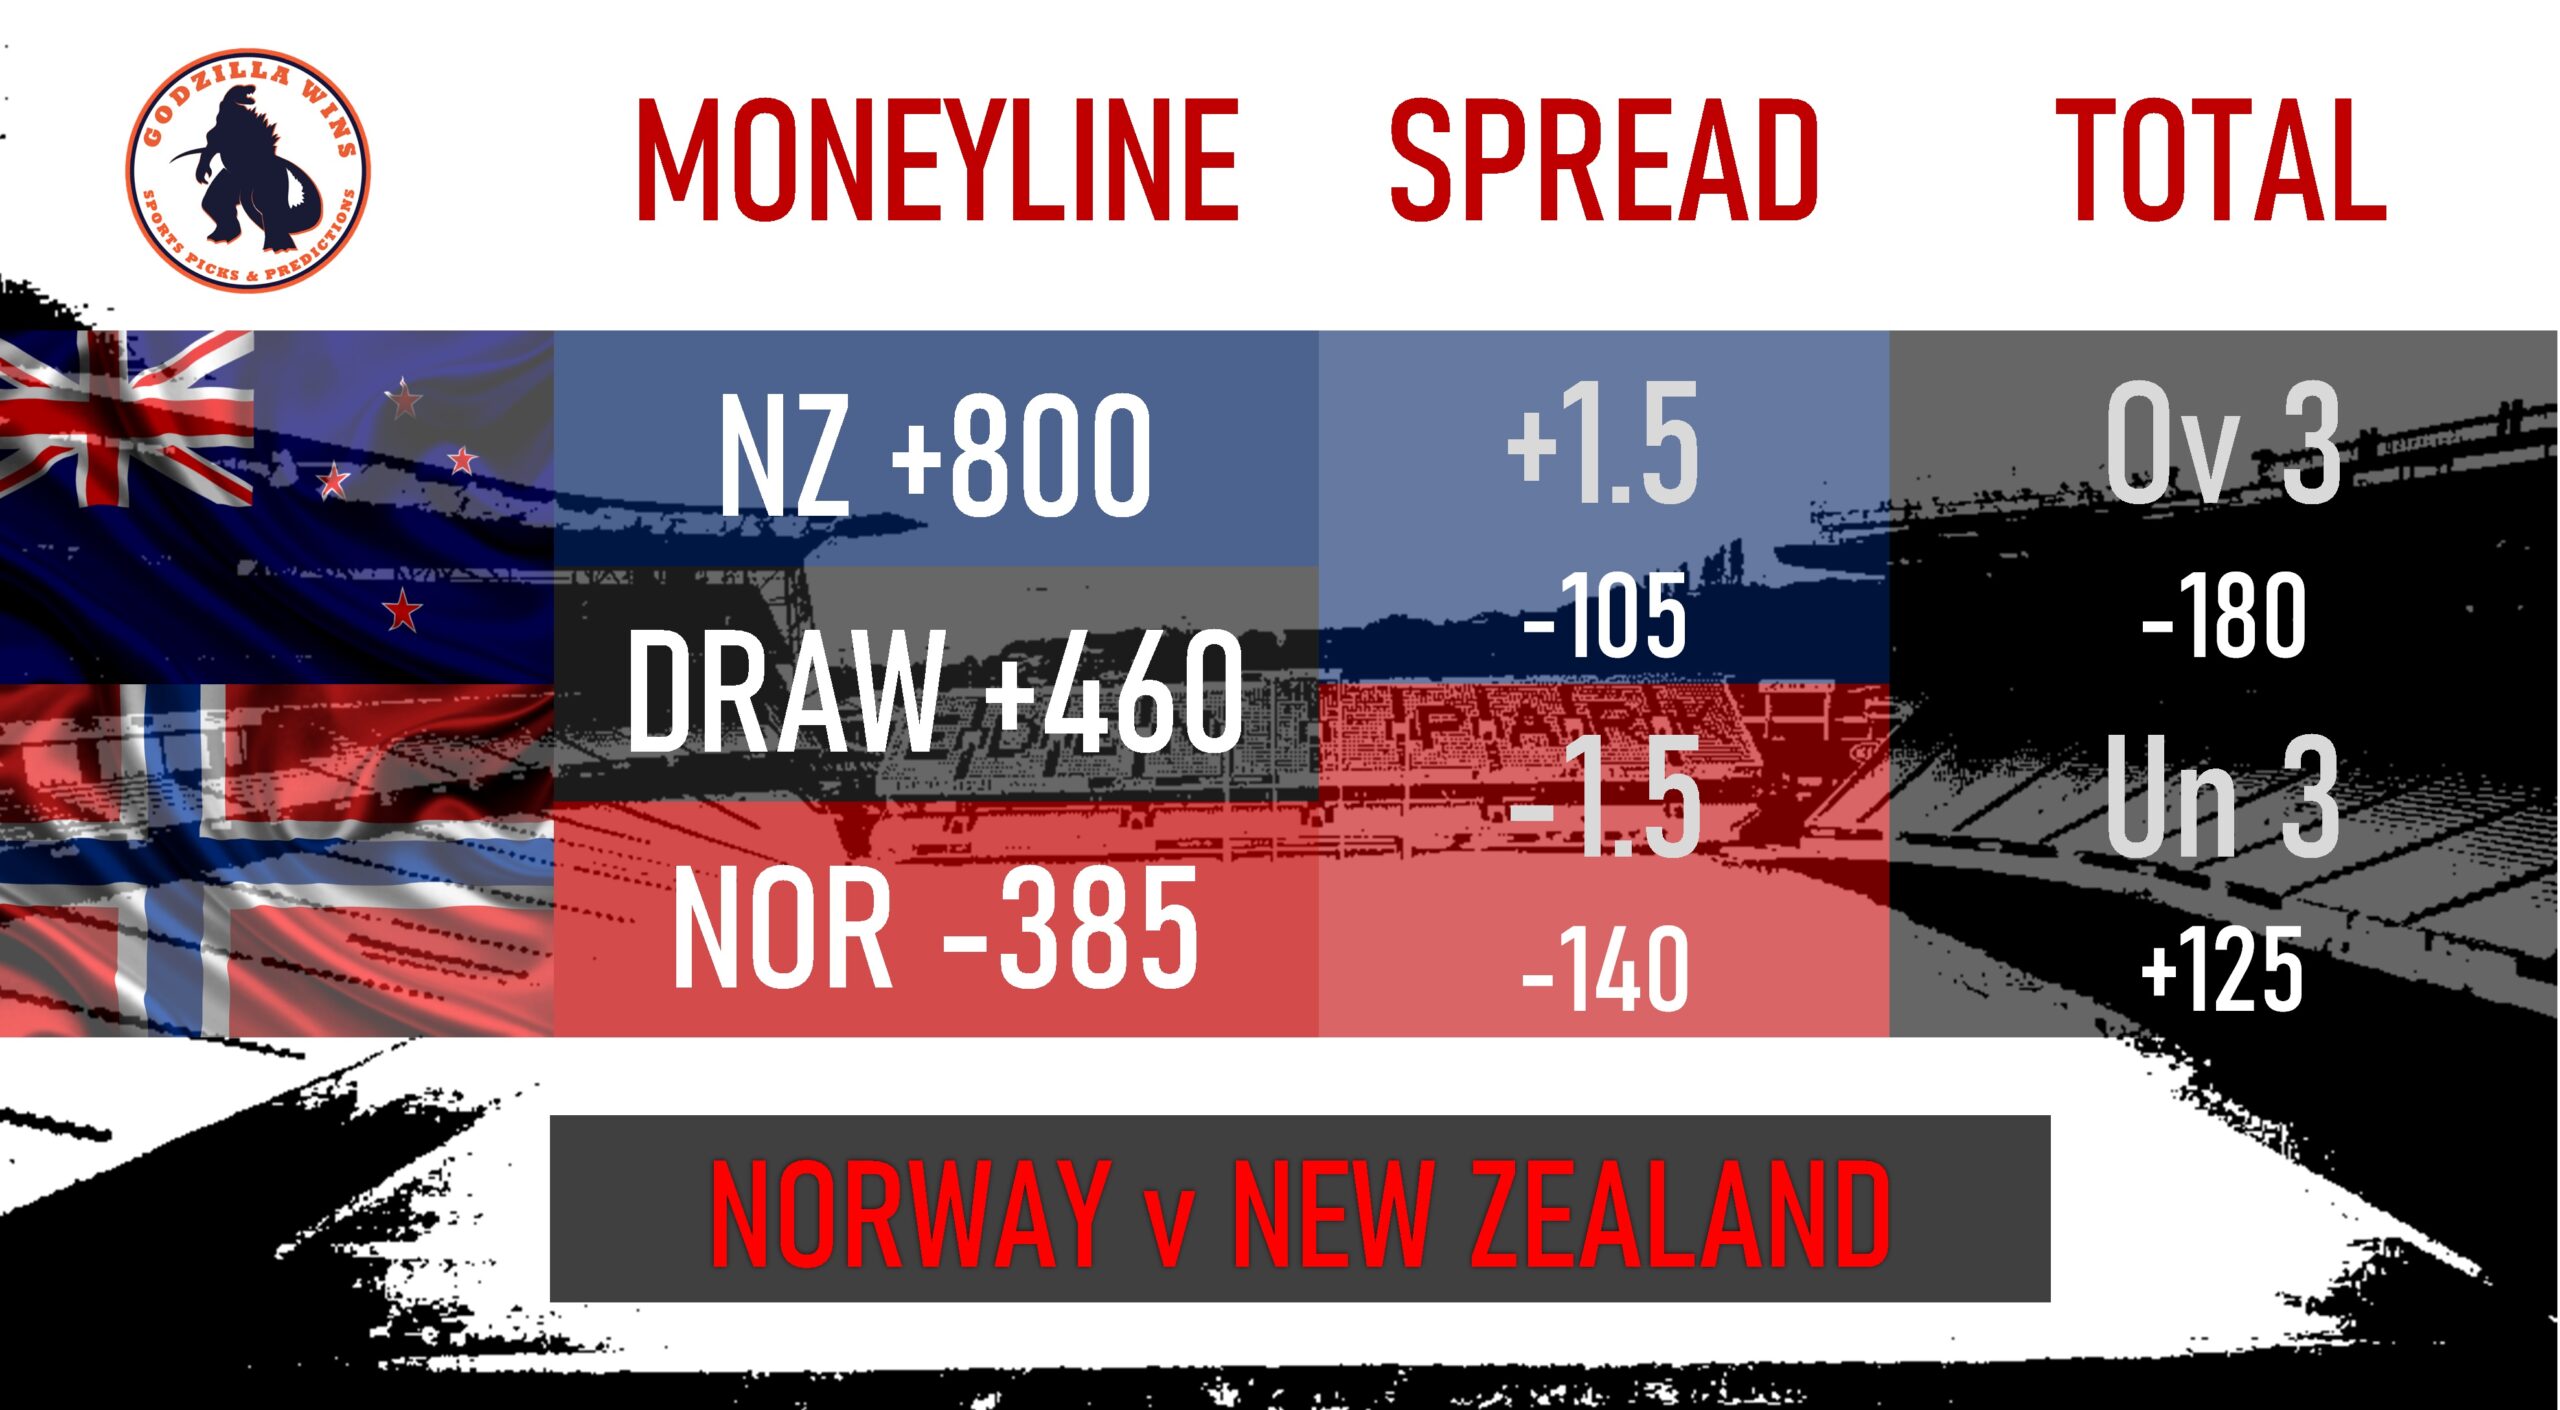 Norway vs. New Zealand Women Moneyline: Norway -385/New Zealand +800/Draw +460